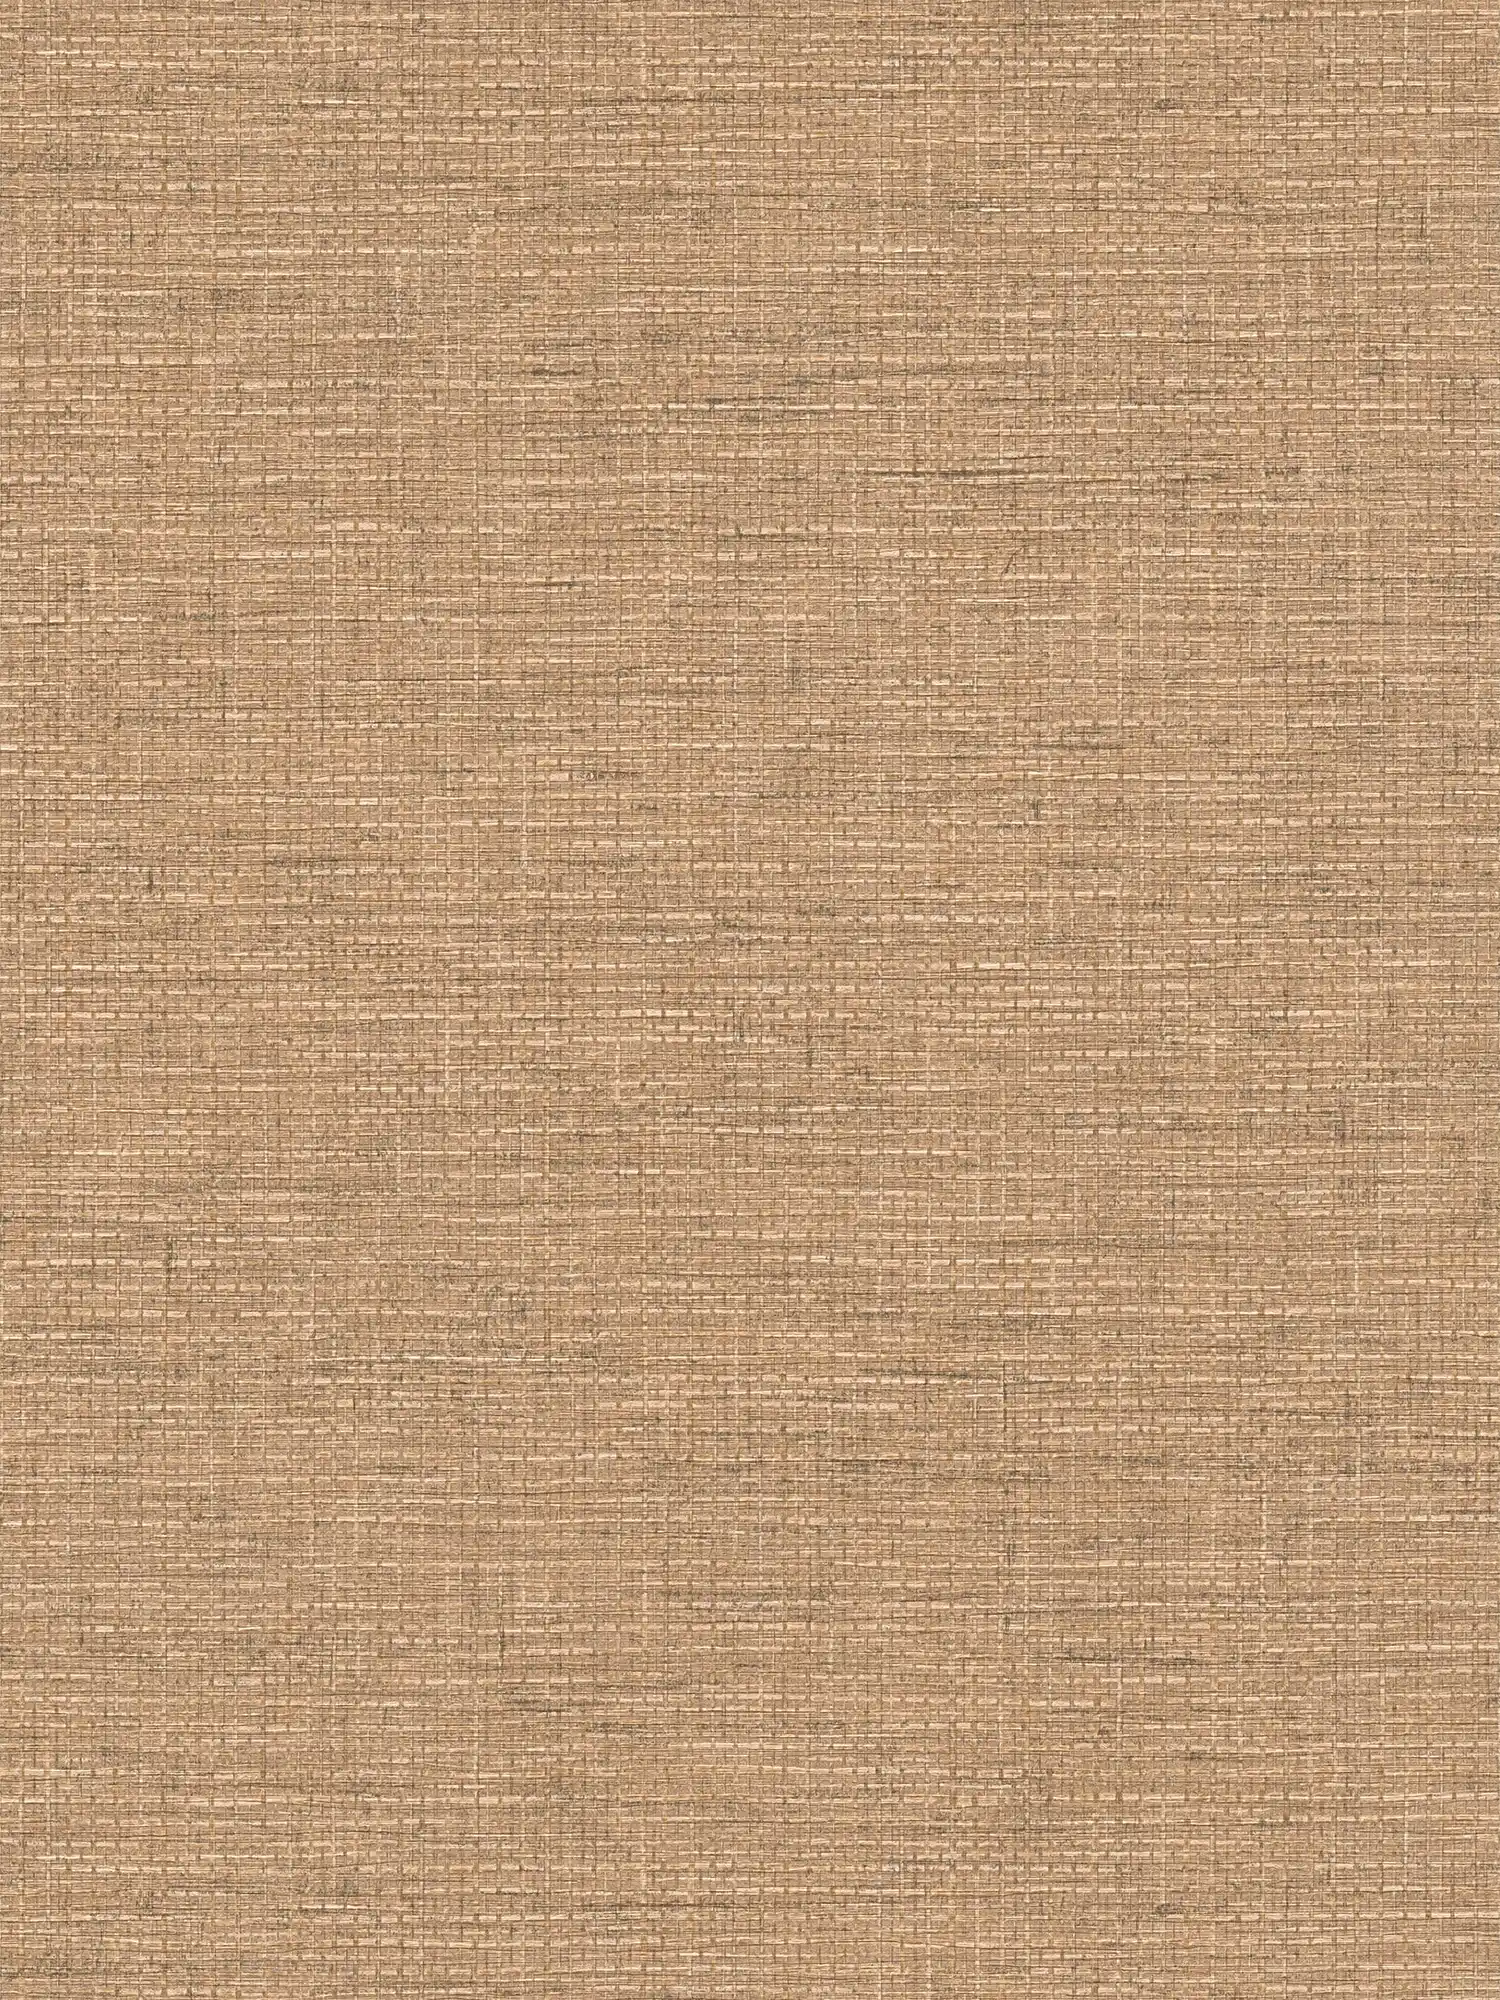 Raffia style raffia wallpaper with fabric look - beige
